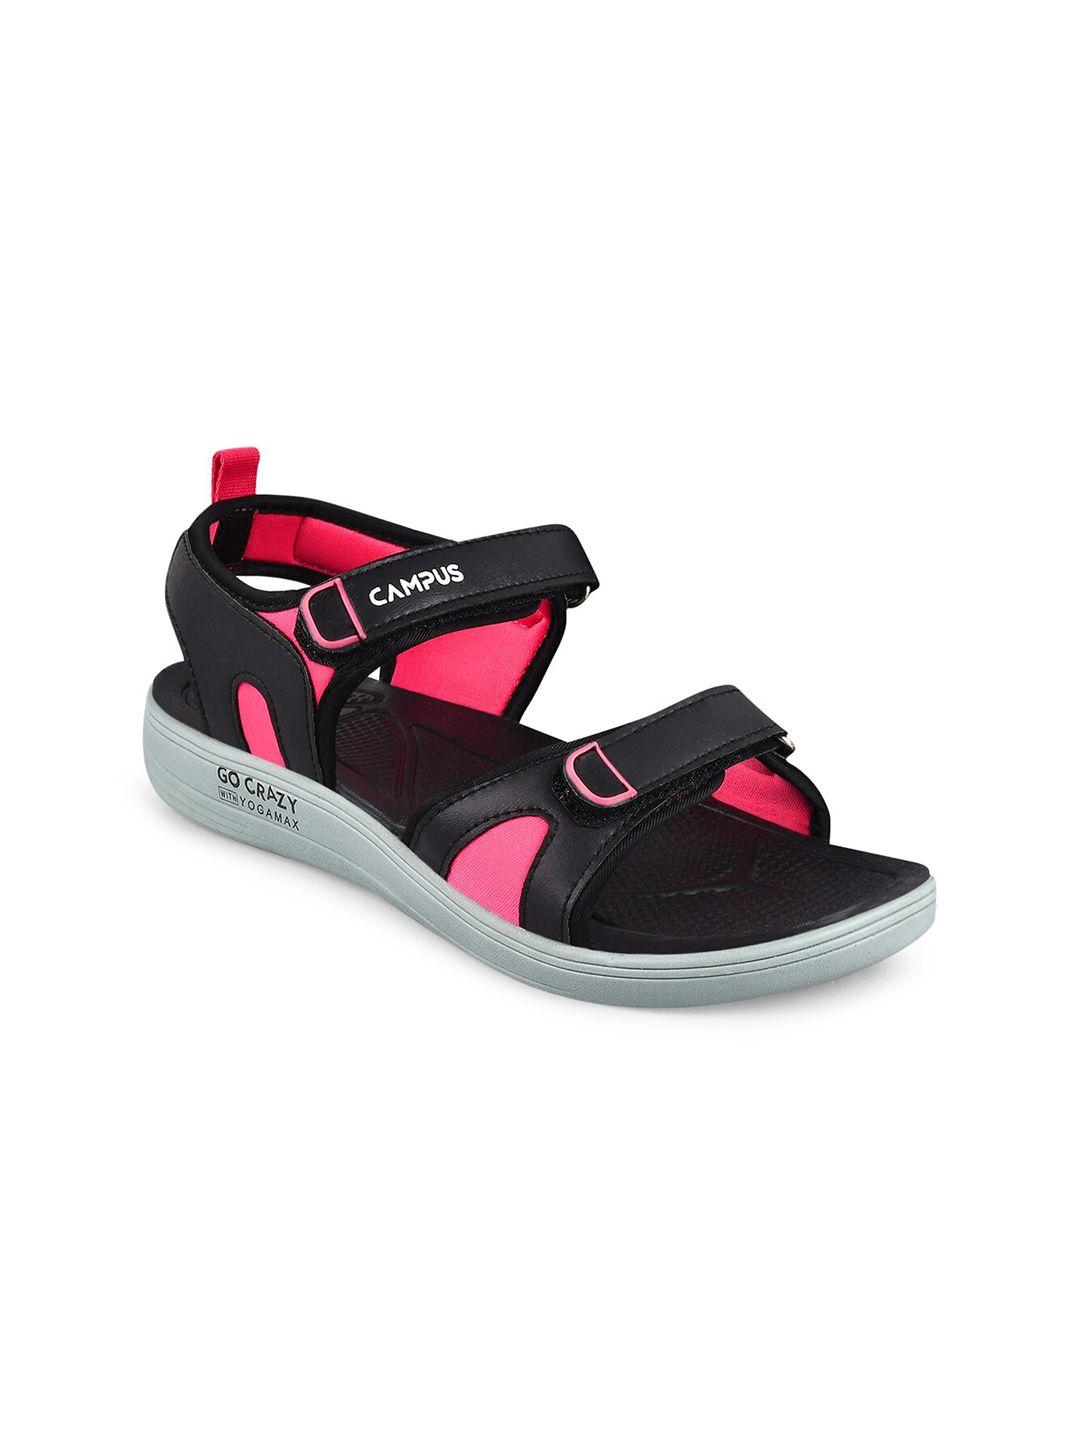 campus-women-black-&-pink-patterned-sports-sandals